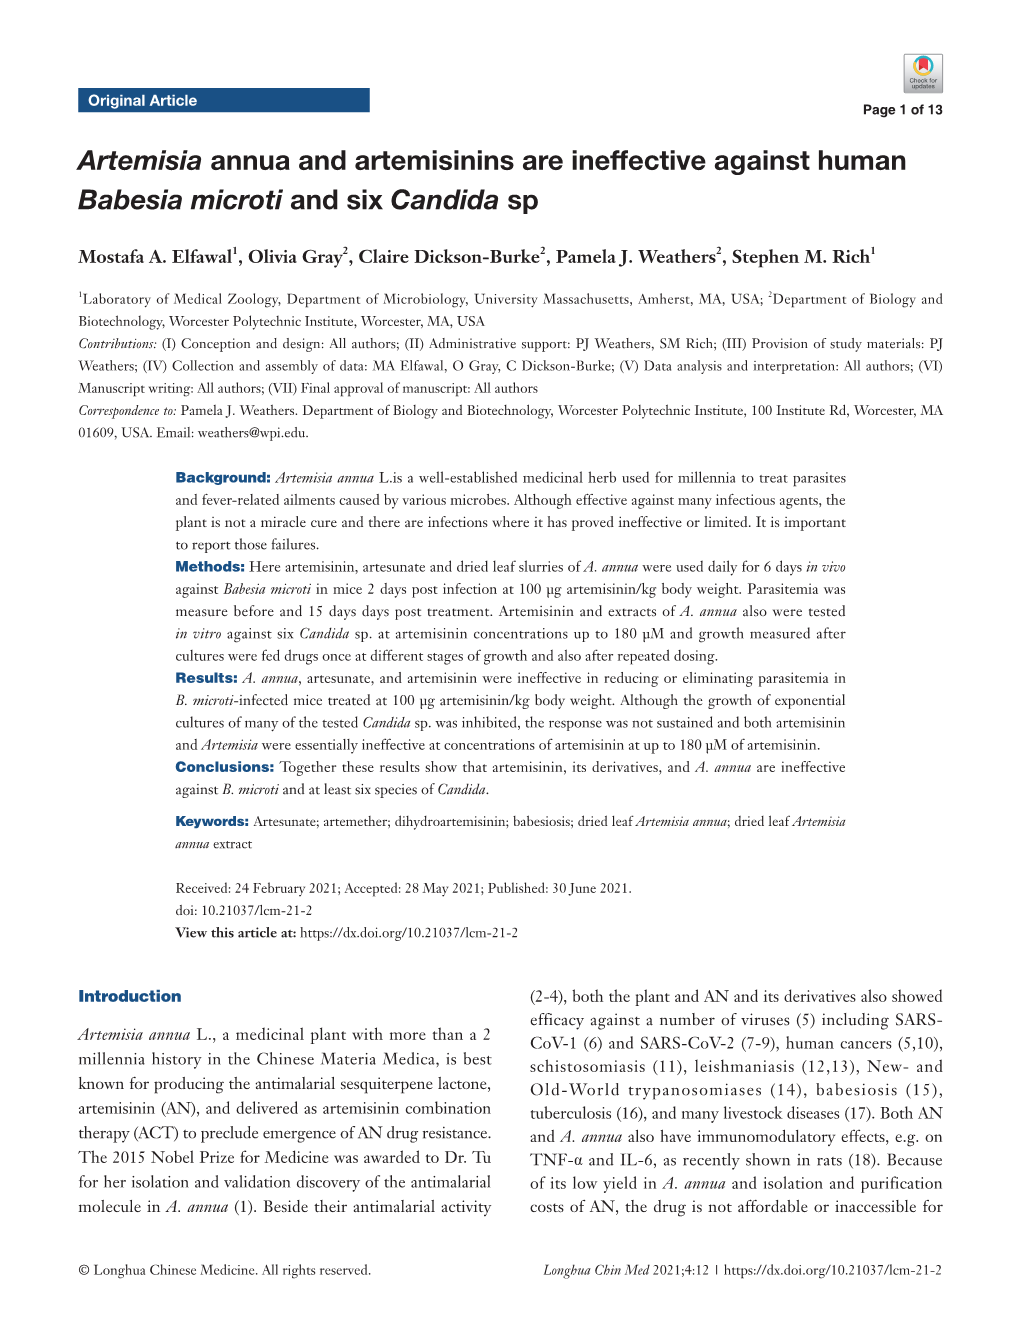 Artemisia Annua and Artemisinins Are Ineffective Against Human Babesia Microti and Six Candida Sp